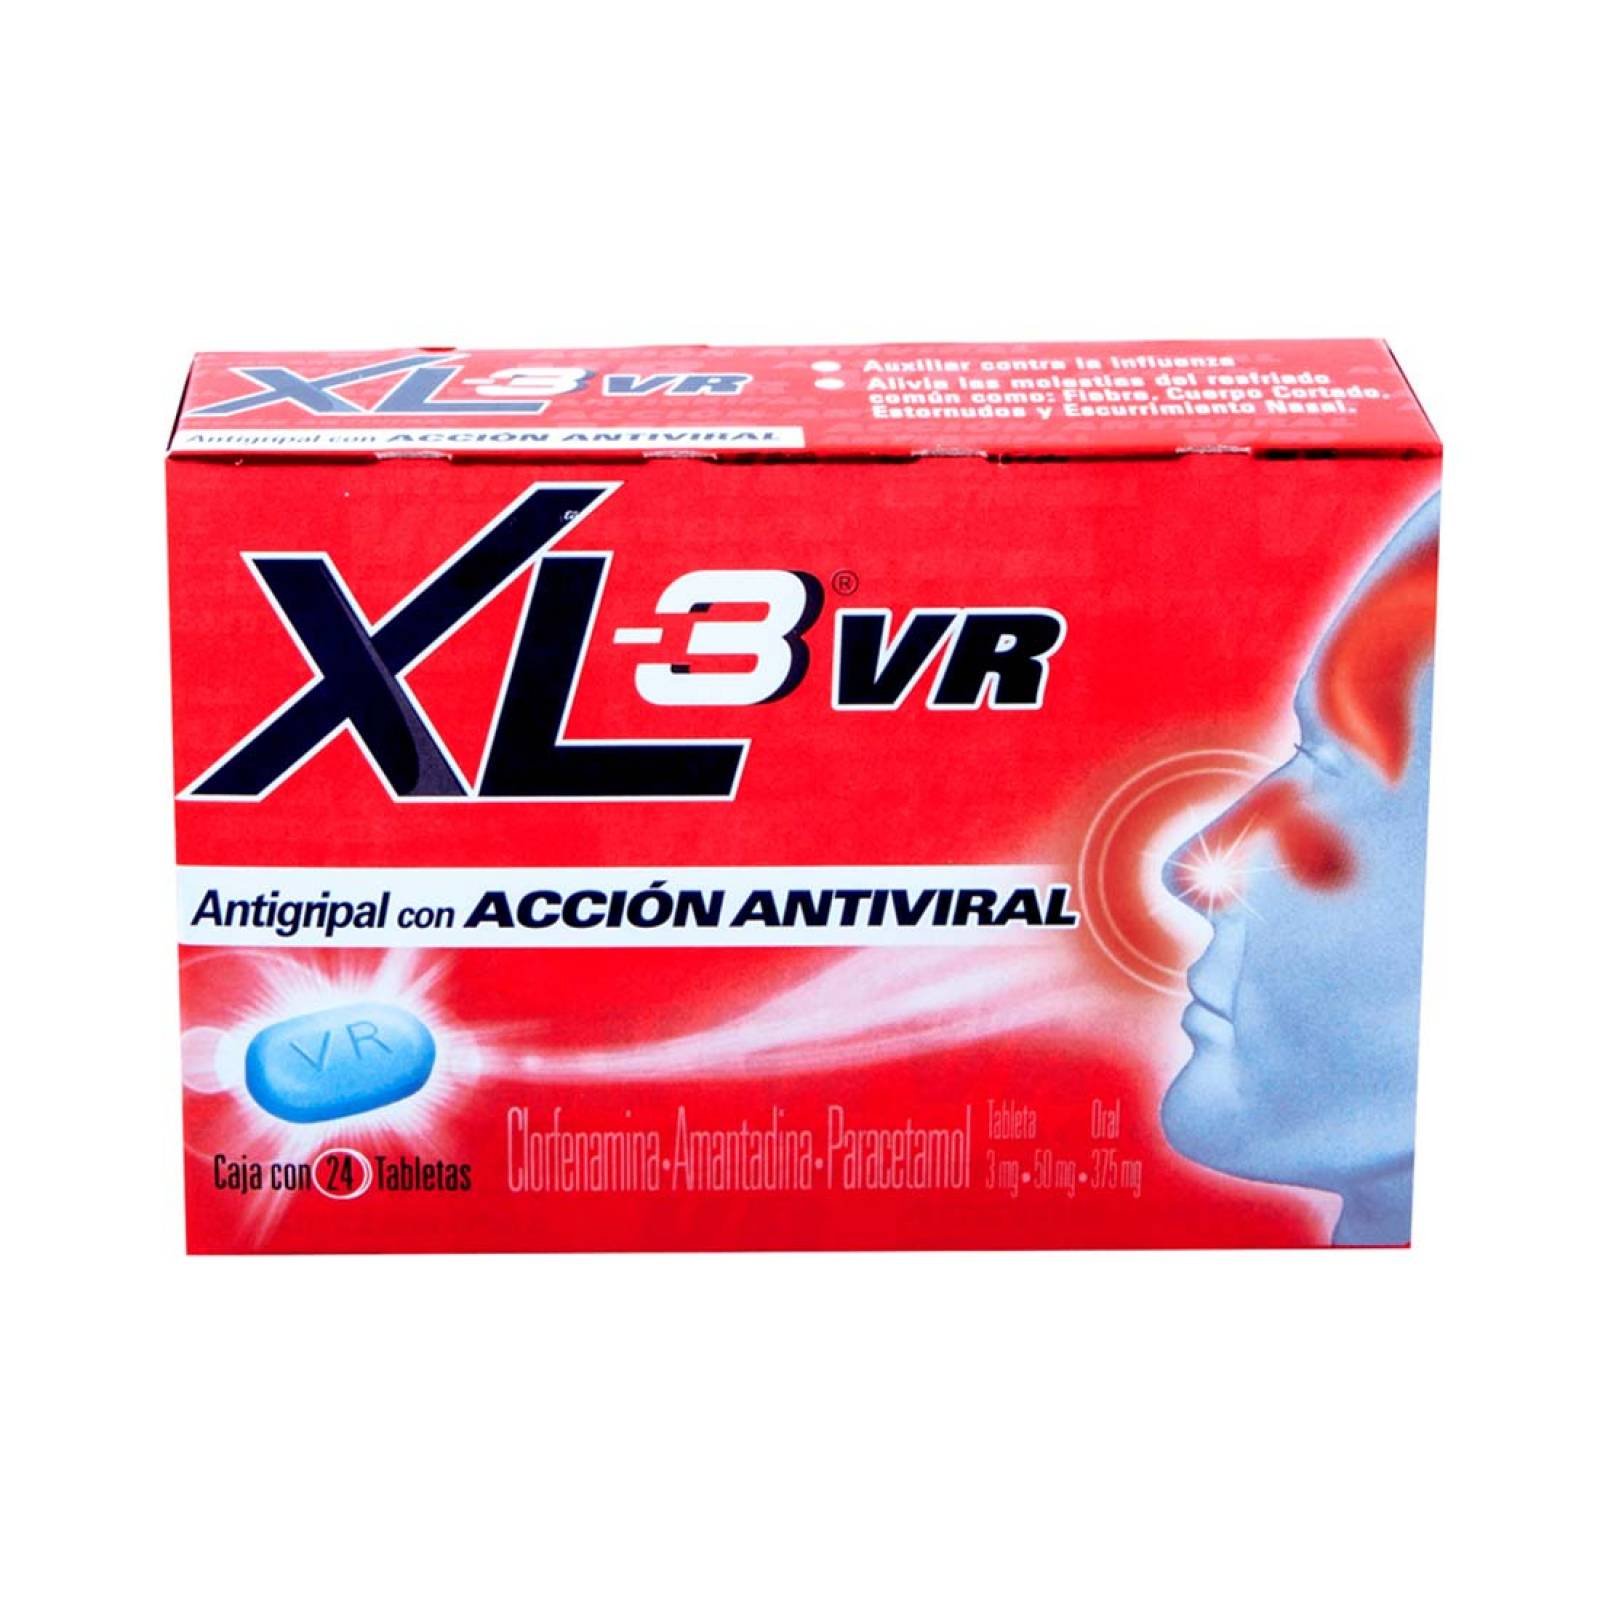 XL-3 VR Antigripal Antiviral Caja 24 Tabletas Genomma Lab